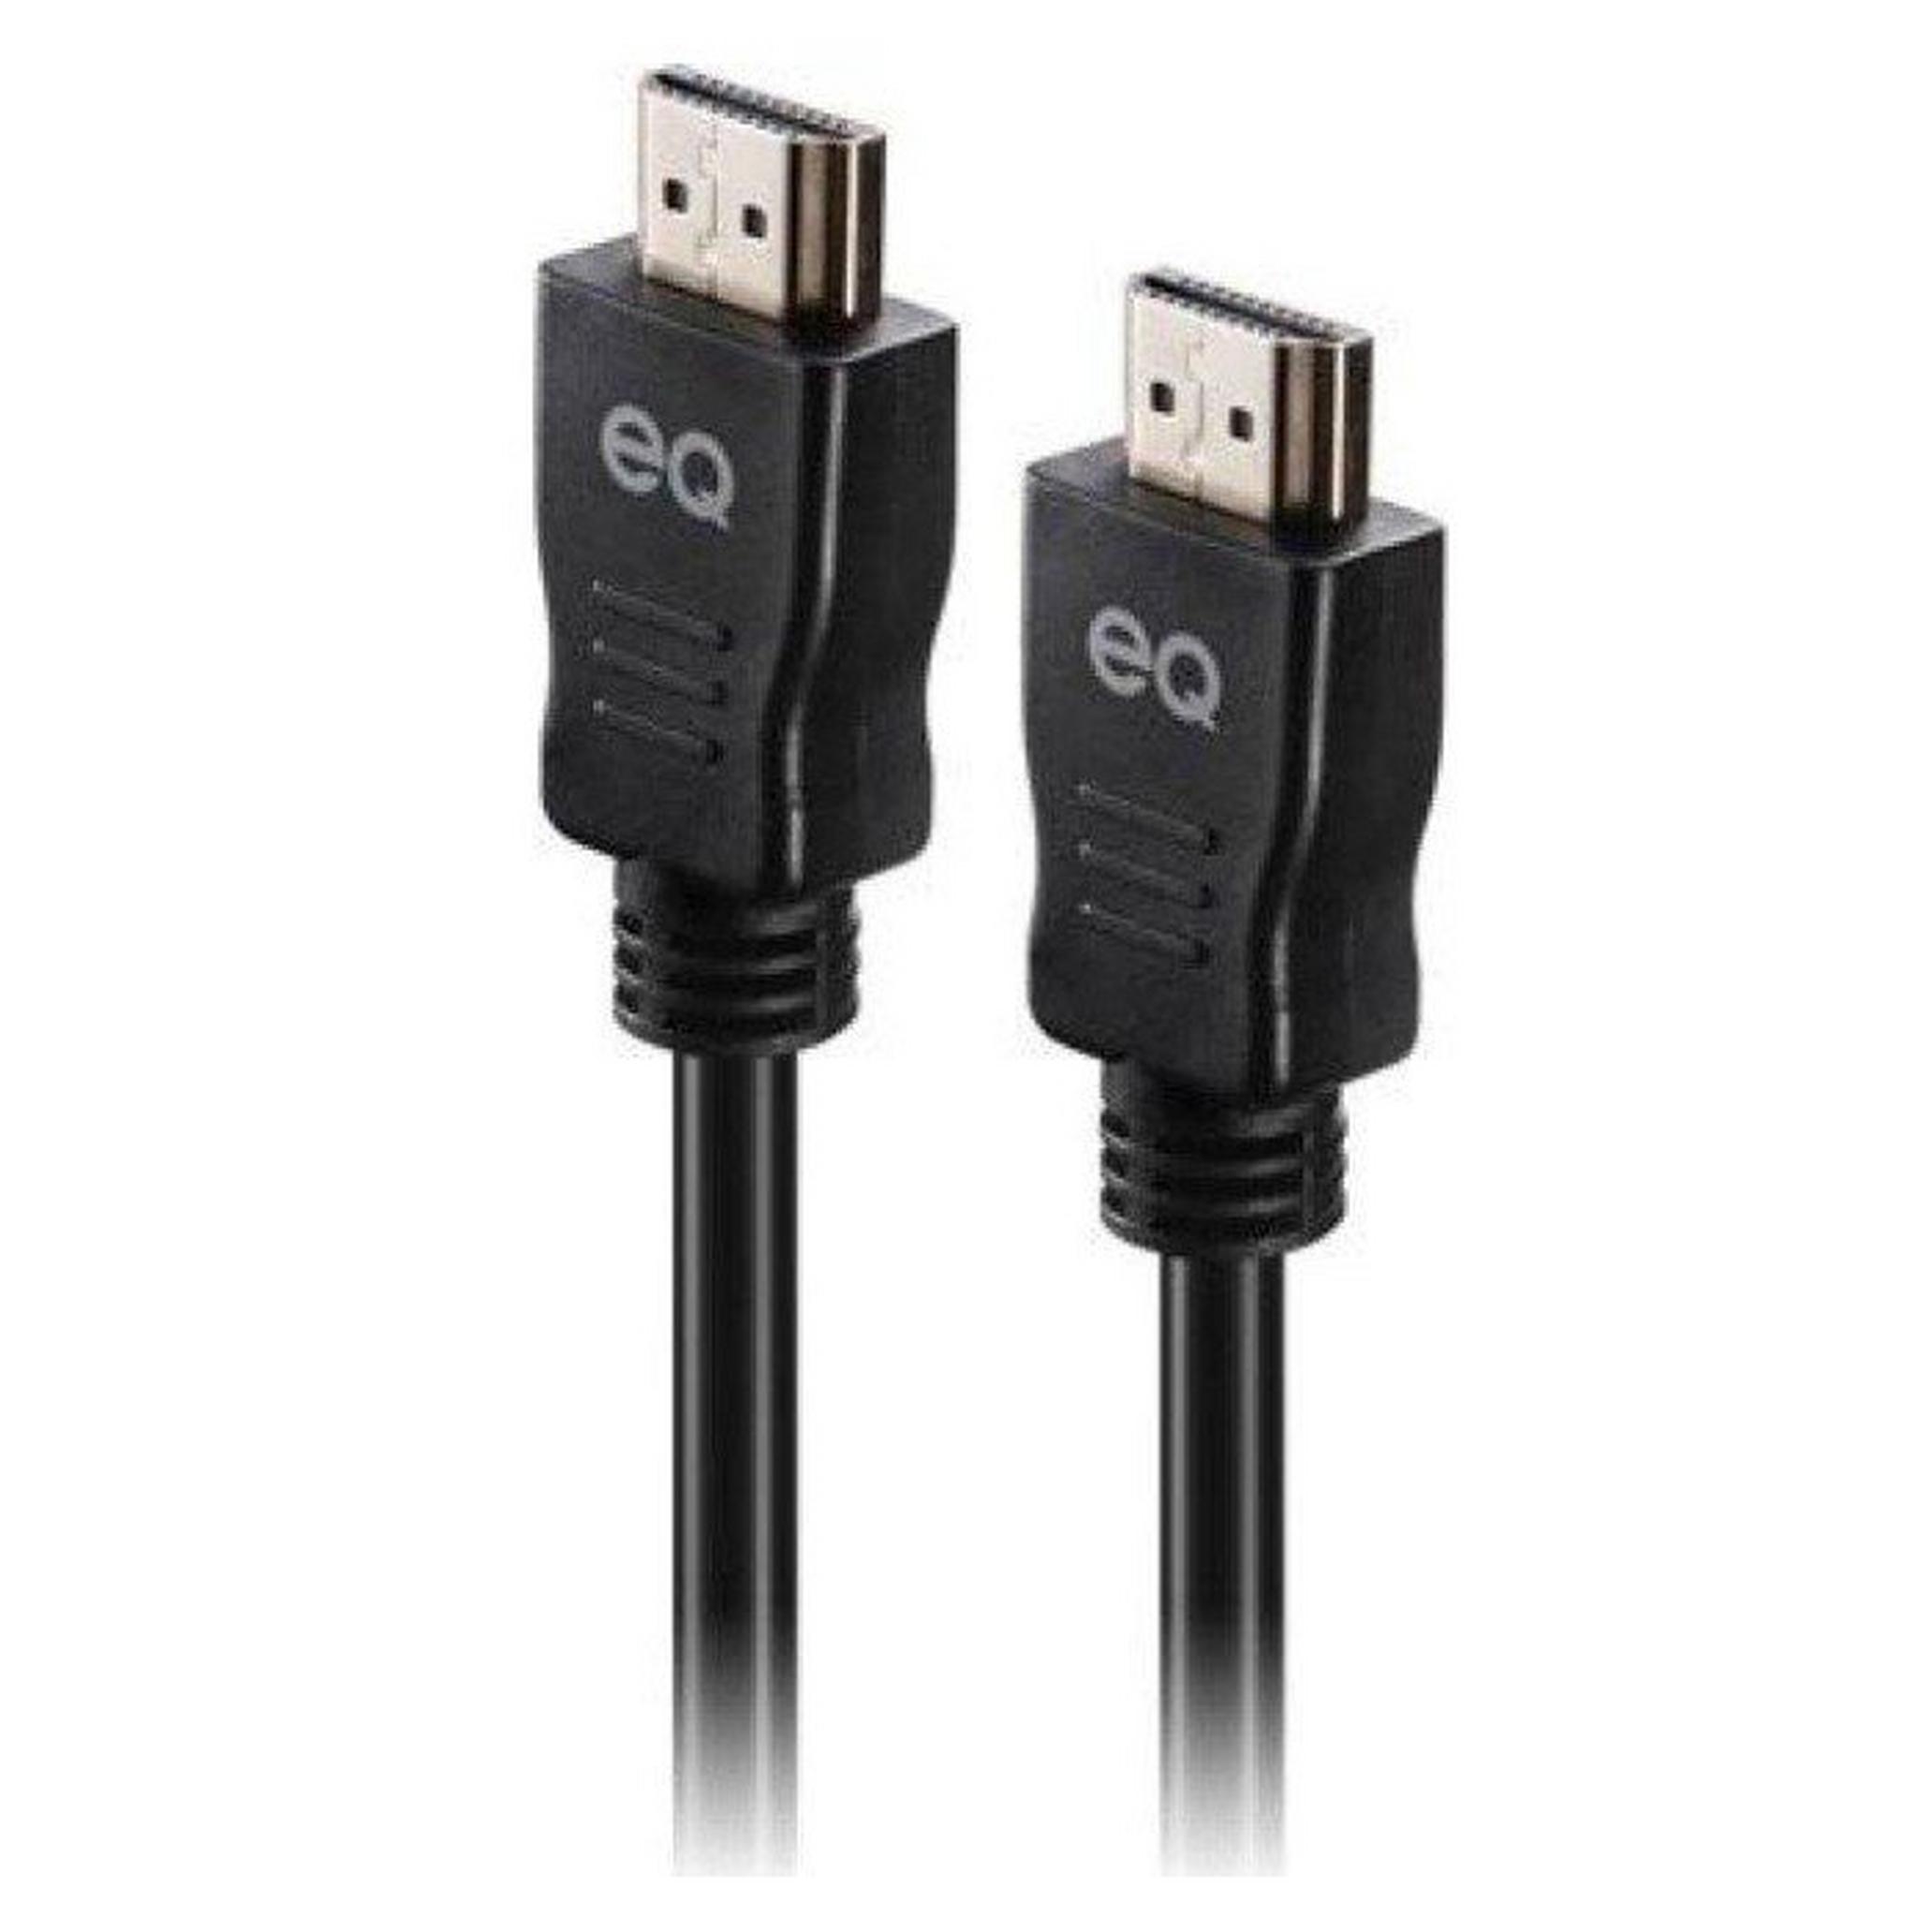 EQ 5M Hdmi Cable (OM16HD) - Black